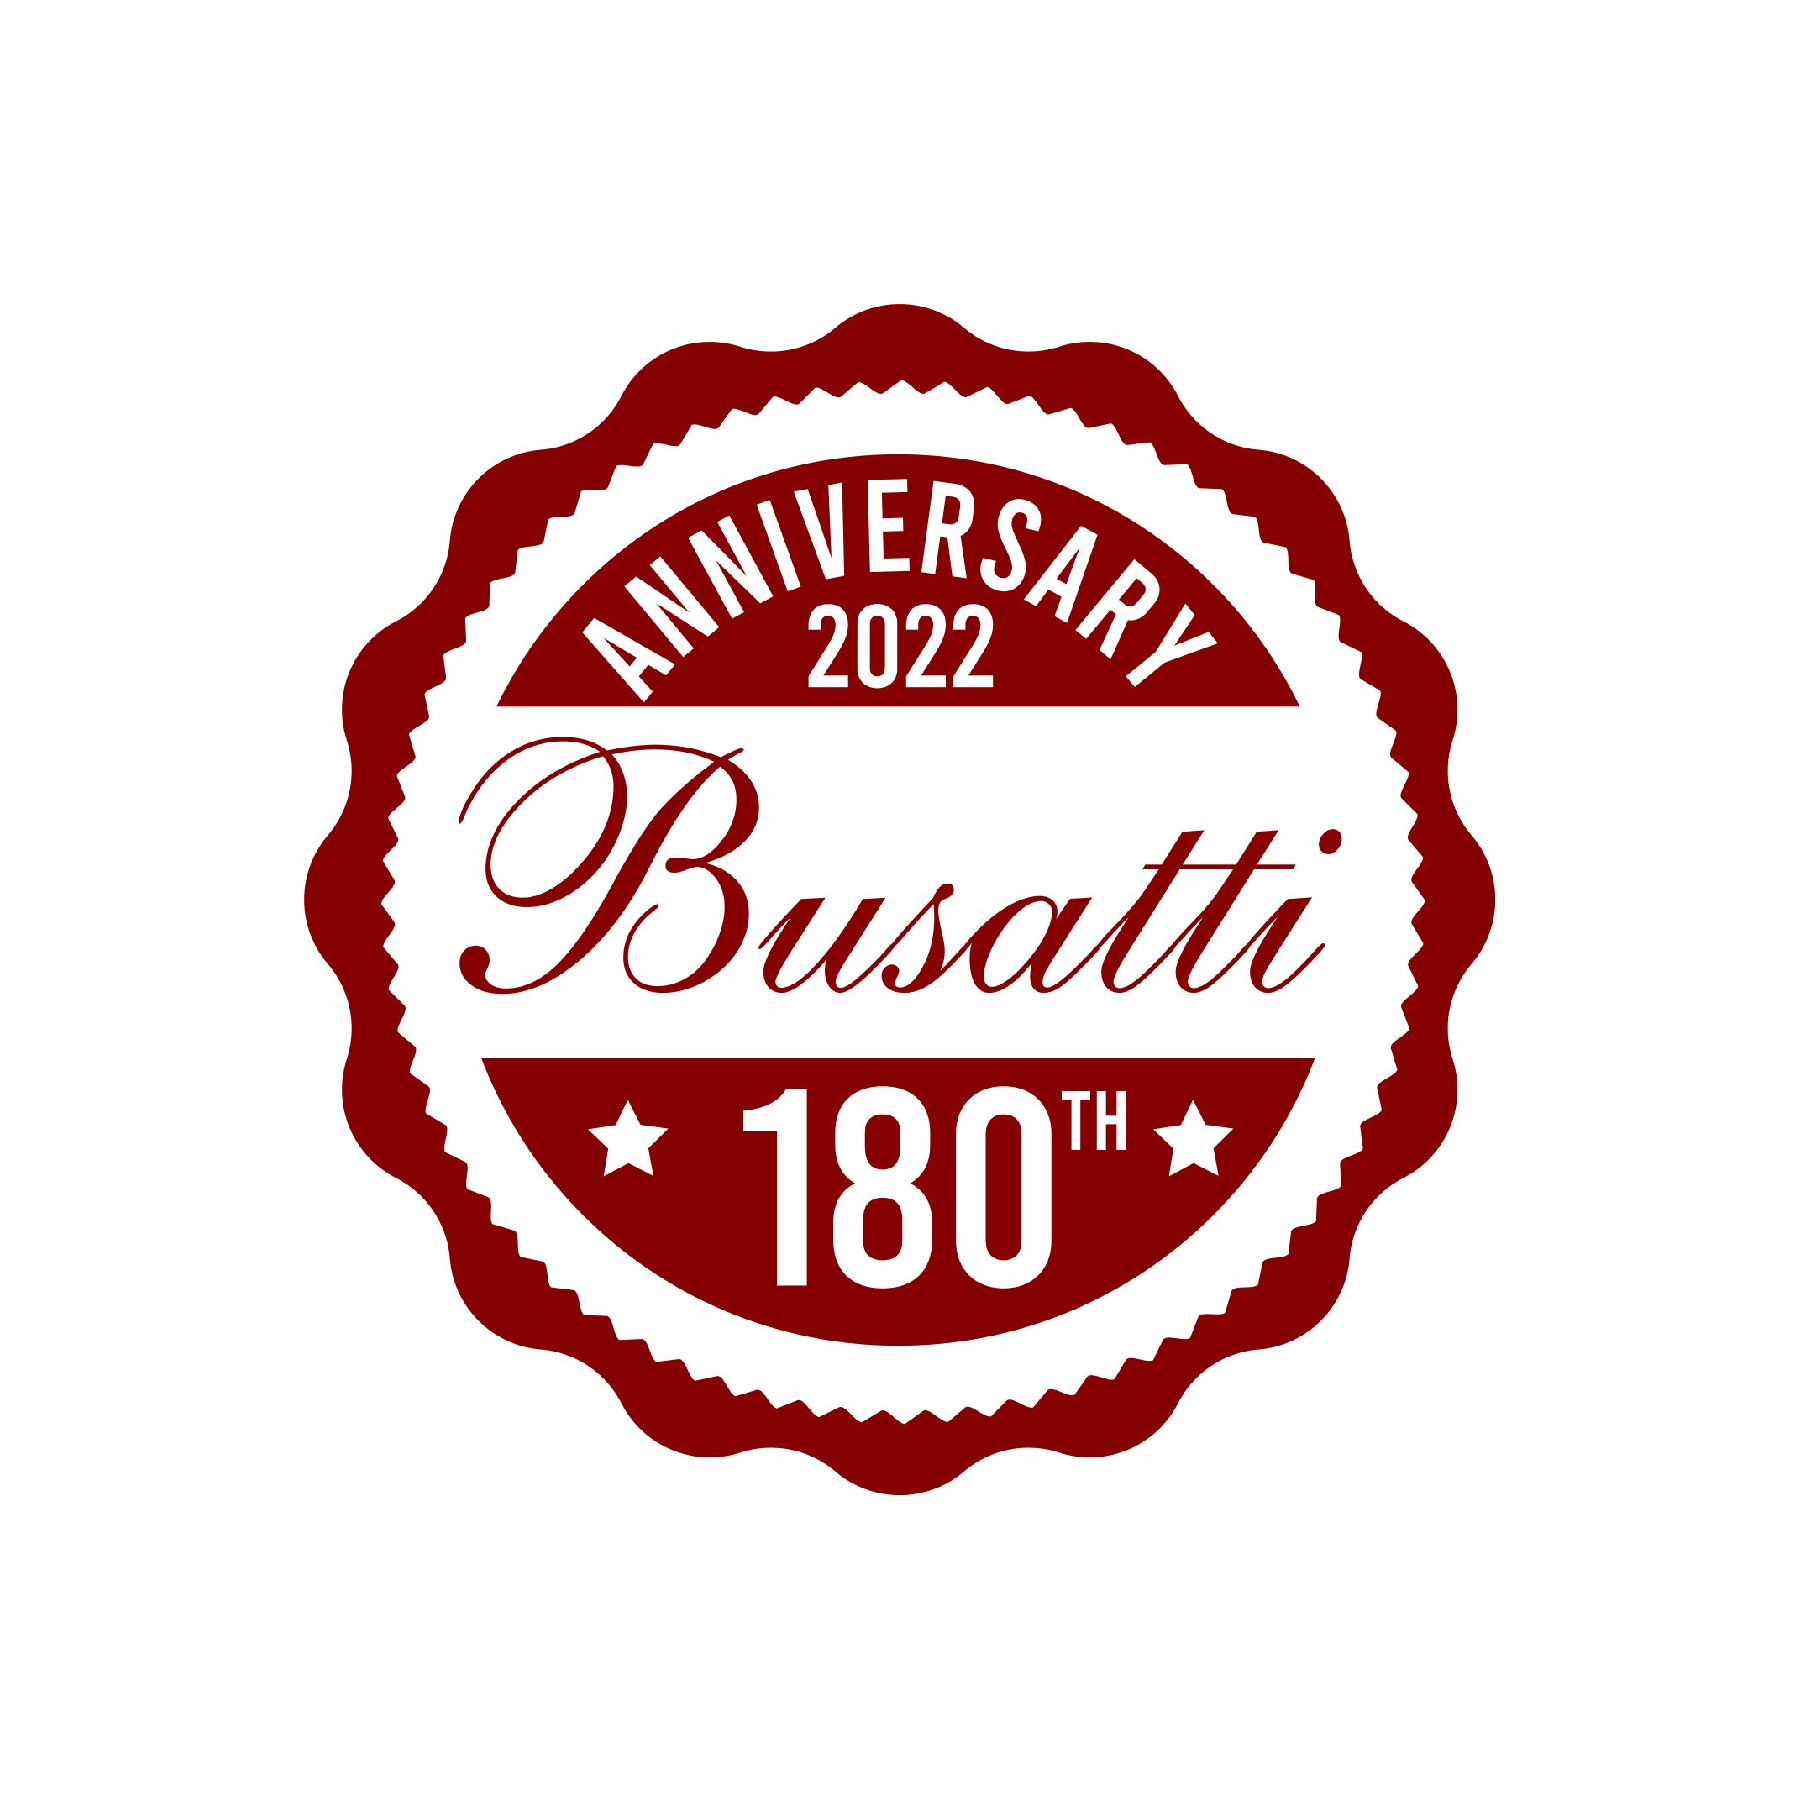 Sponsor Busatti